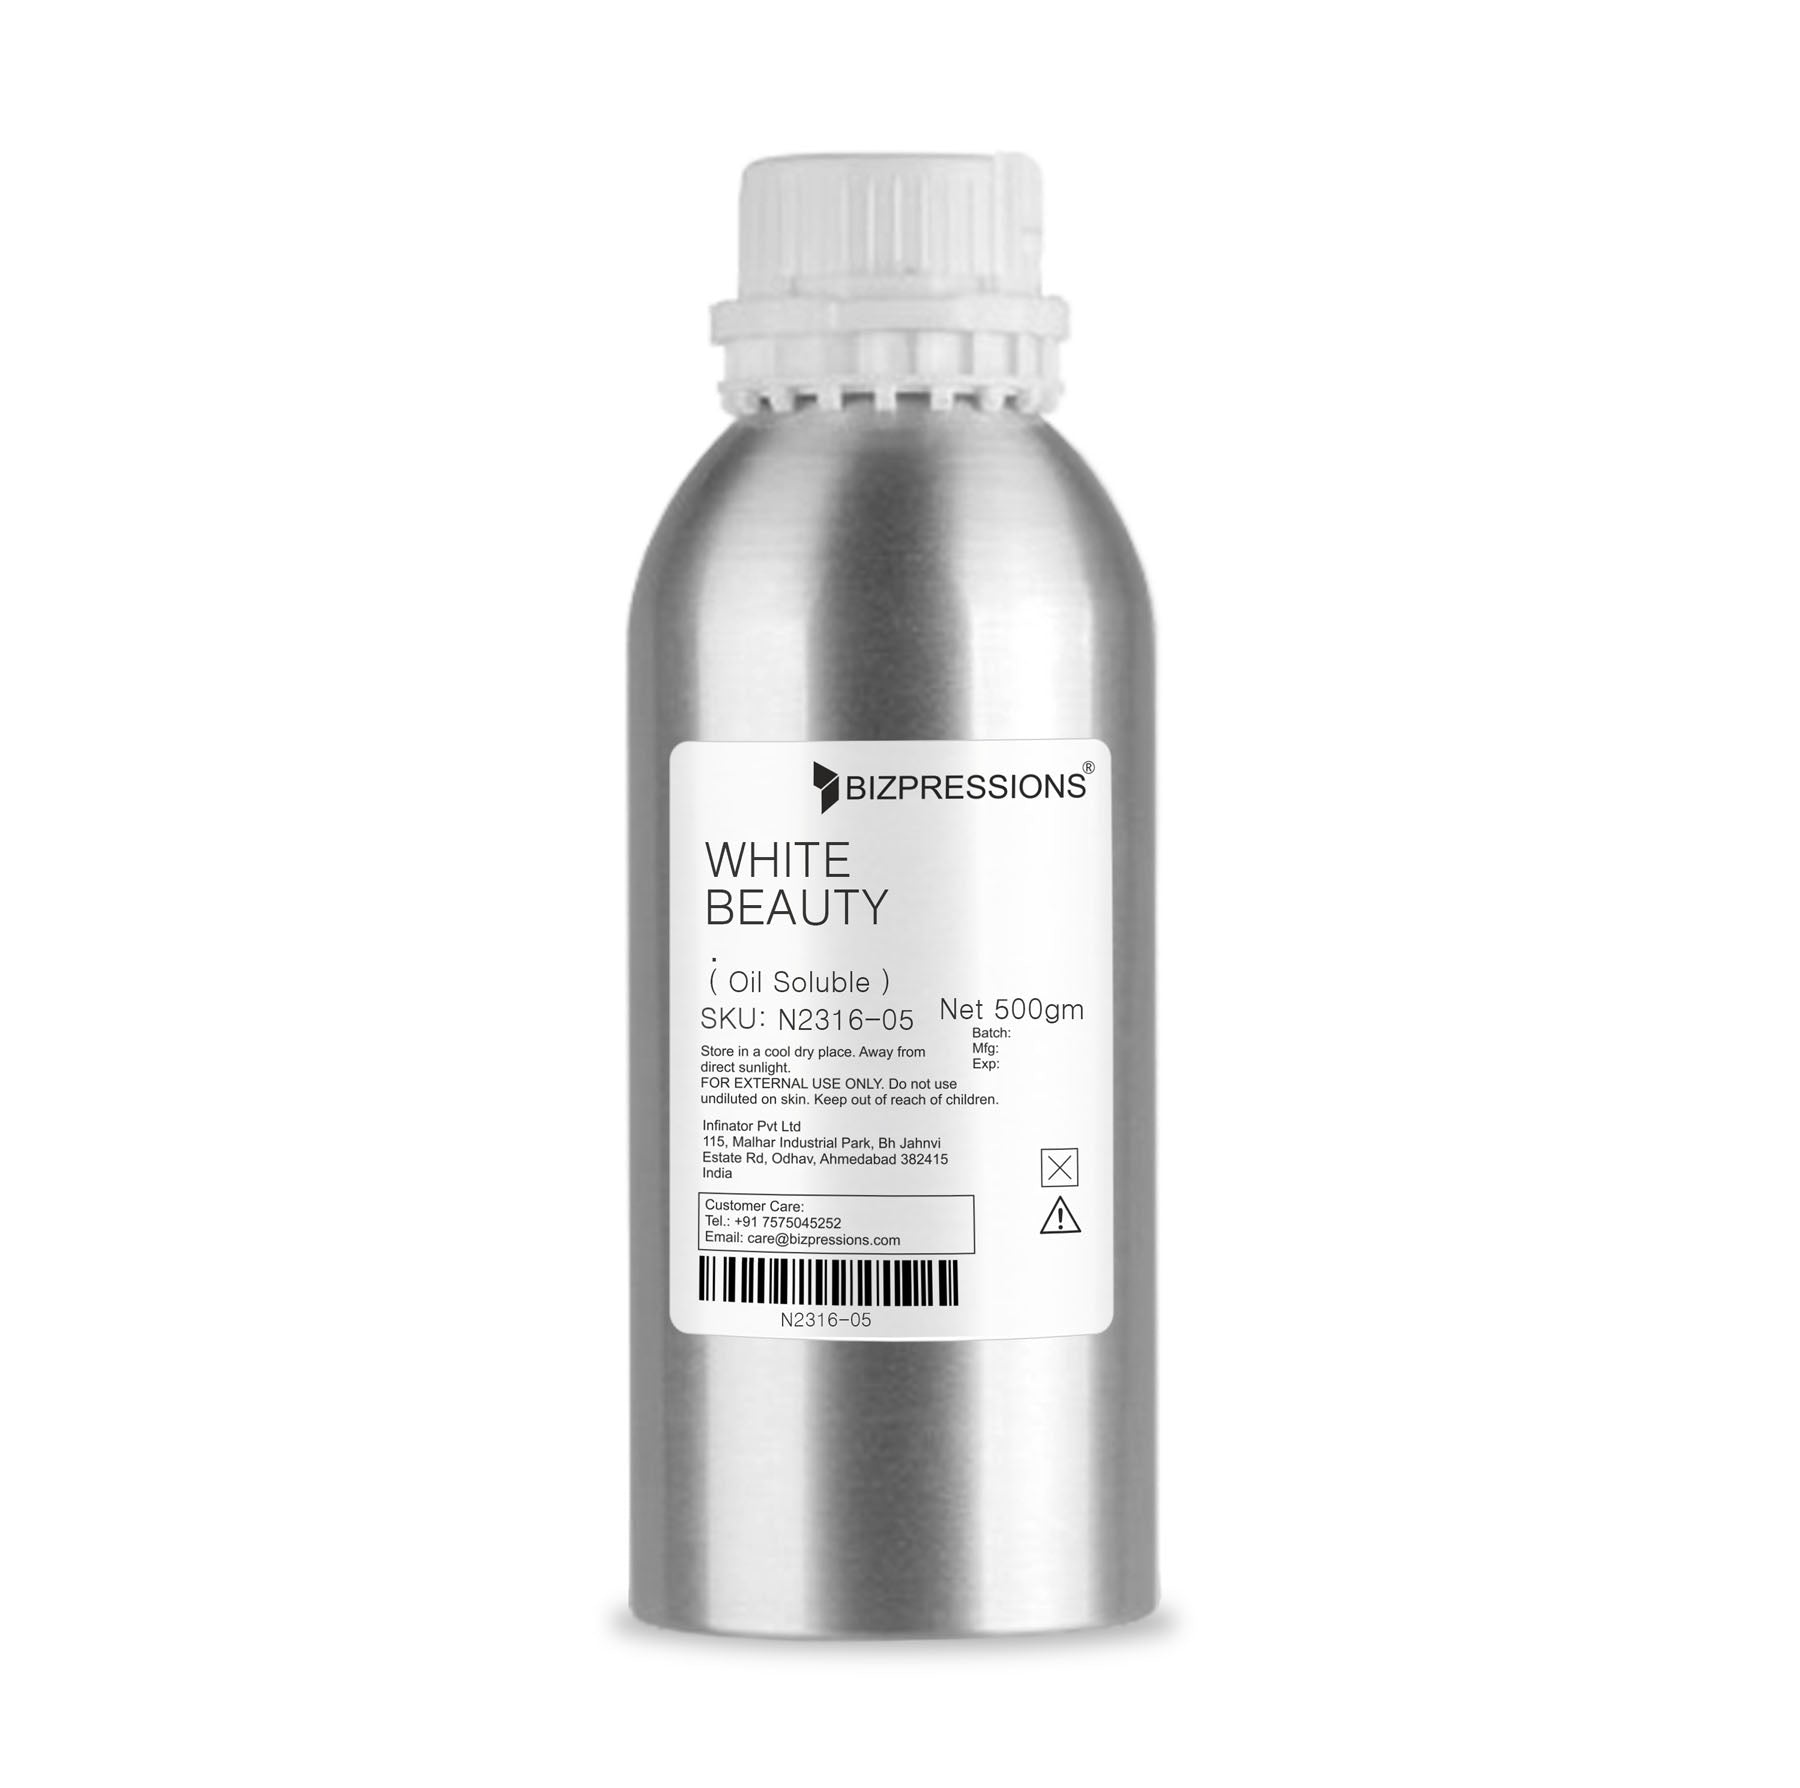 WHITE BEAUTY - Fragrance ( Oil Soluble ) - 500 gm